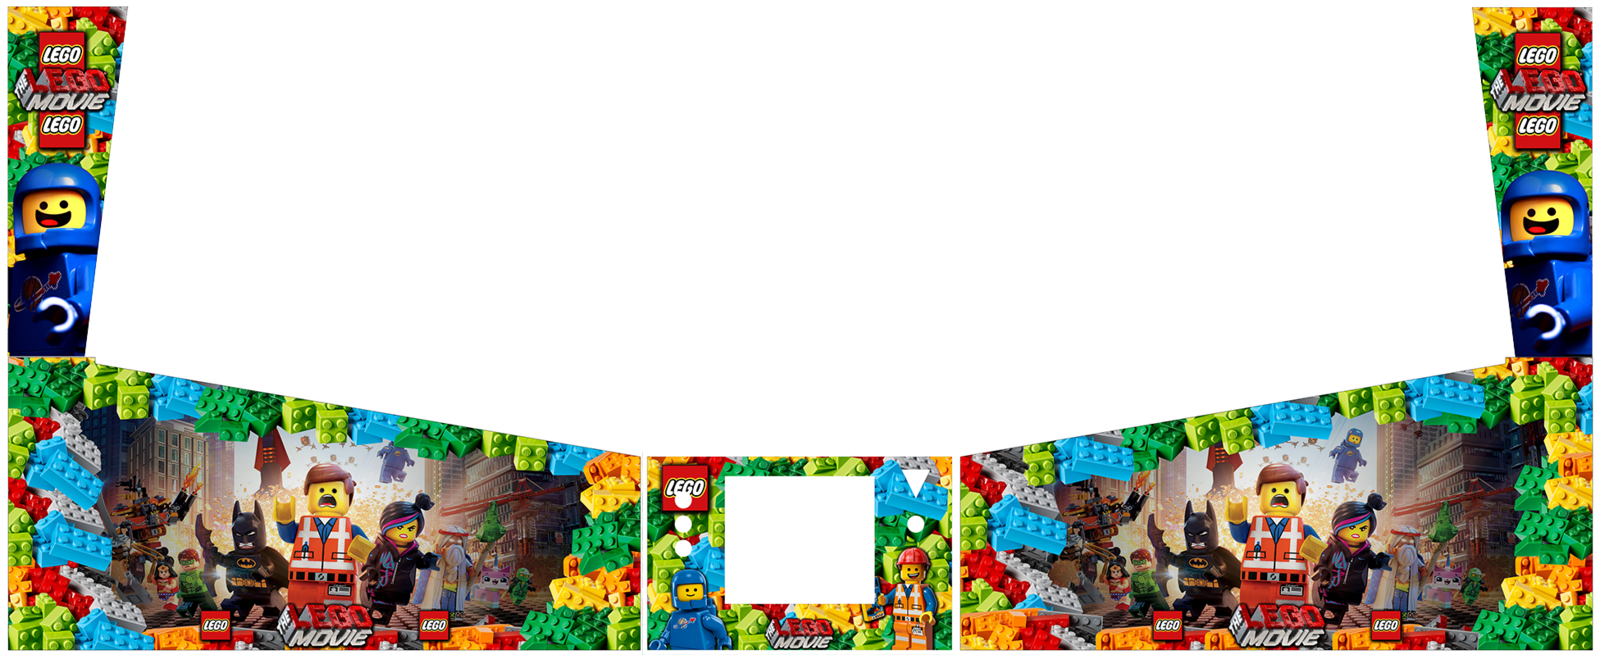 LEGO MOVIE PINBALL Pinball Decal Pinball Cabinet Graphic Art  Vinyl Sti - $130.00 - $150.00